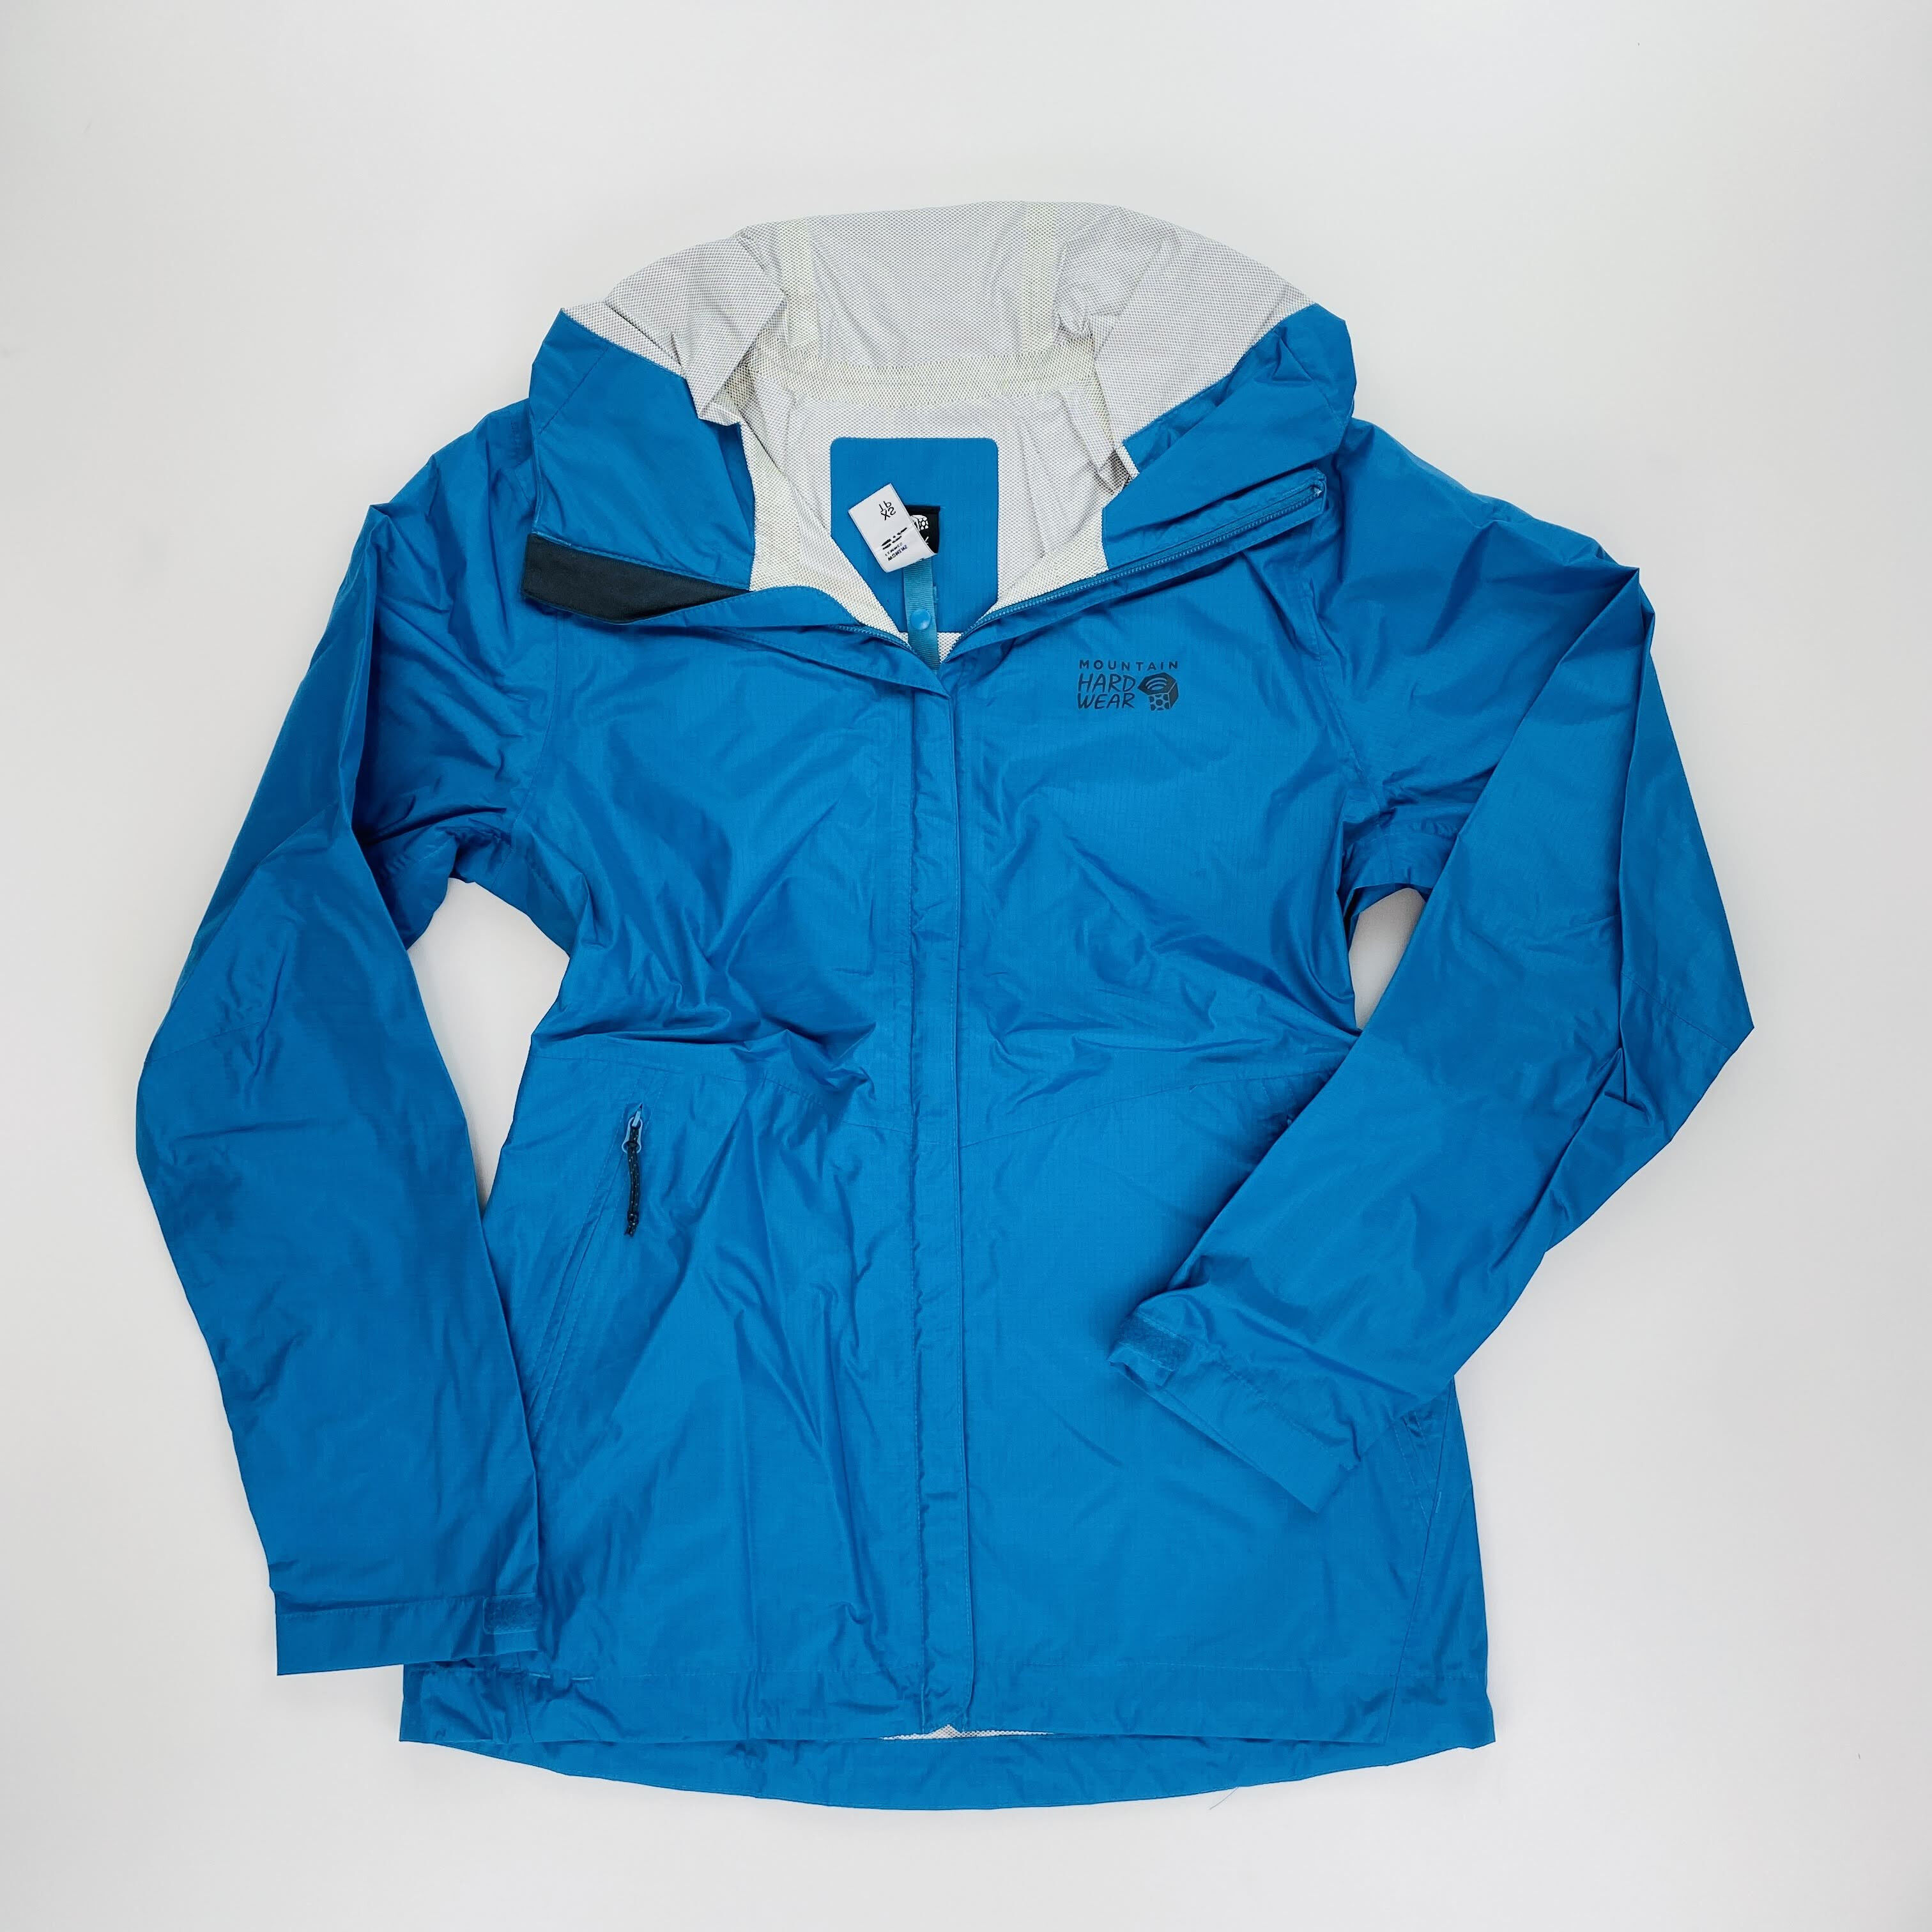 Mountain Hardwear Acadia Woman Jacket - Giacca antipioggia di seconda mano - Donna - Olio blu - XS | Hardloop